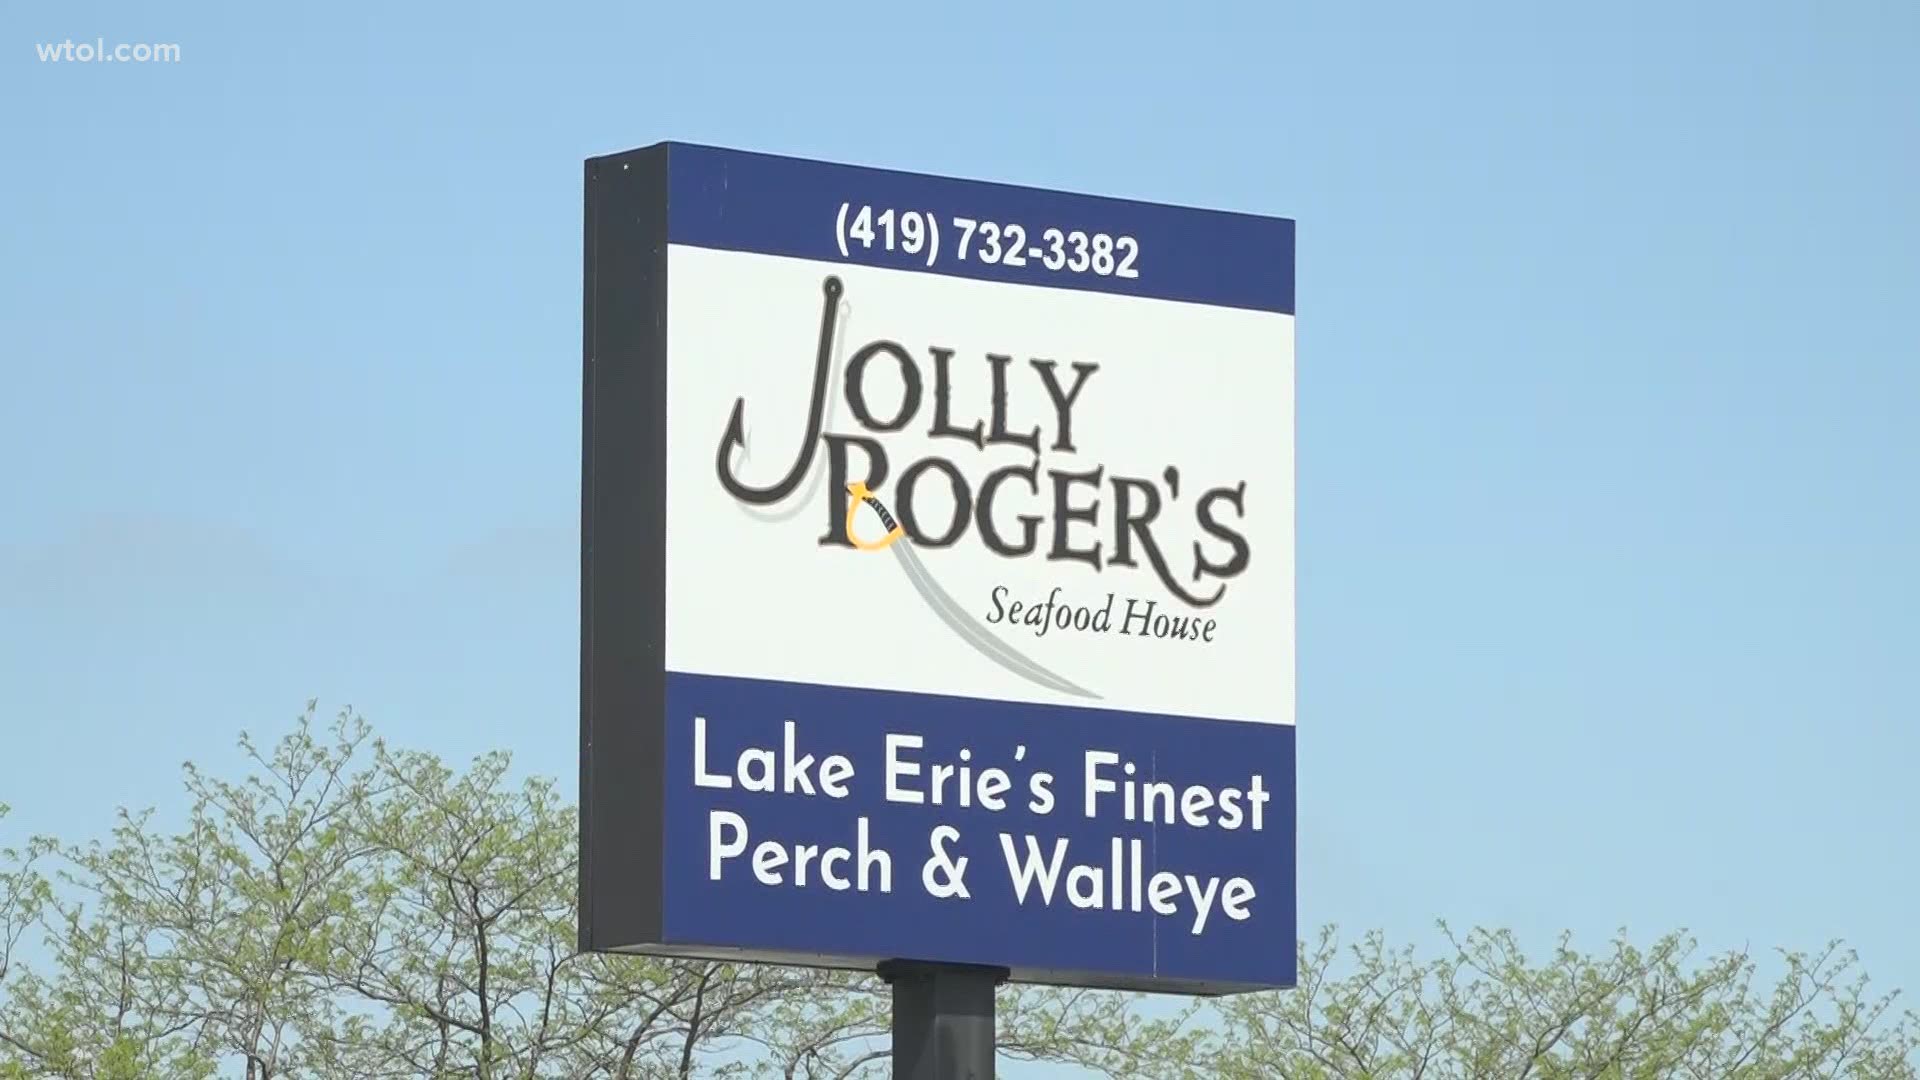 Jolly Roger's new location